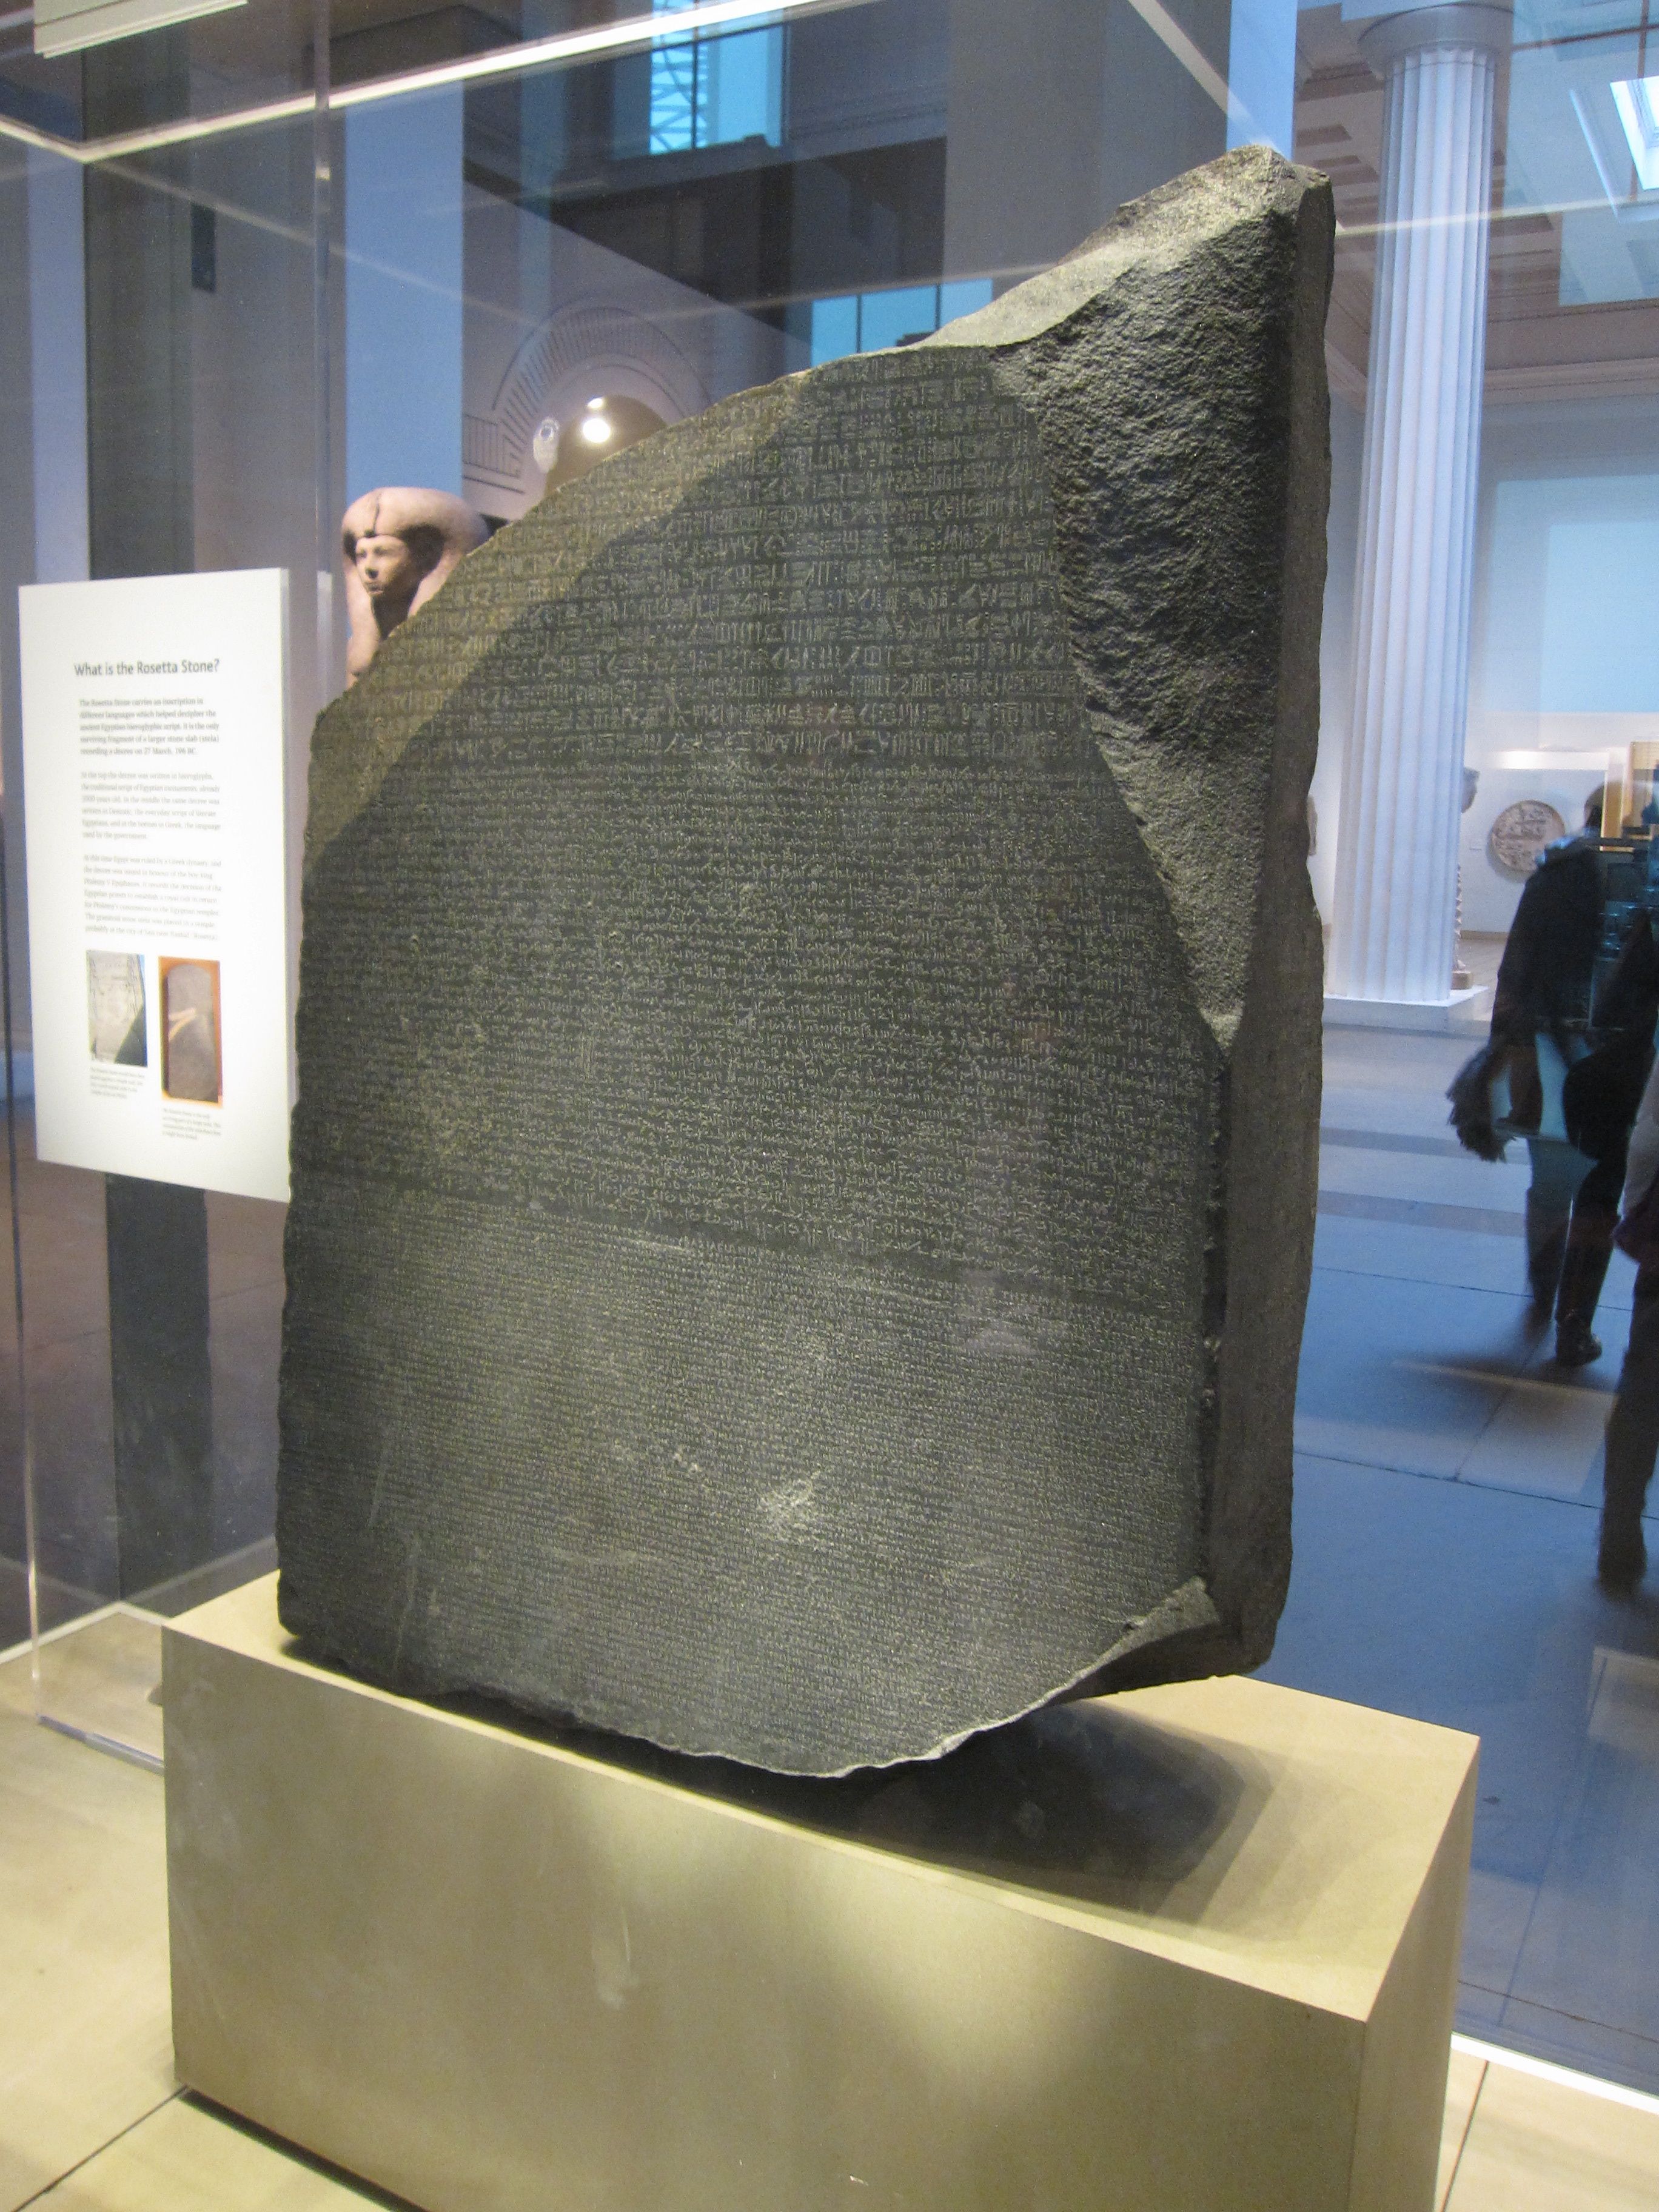 How To Get Rosetta Stone For Free - westernaj